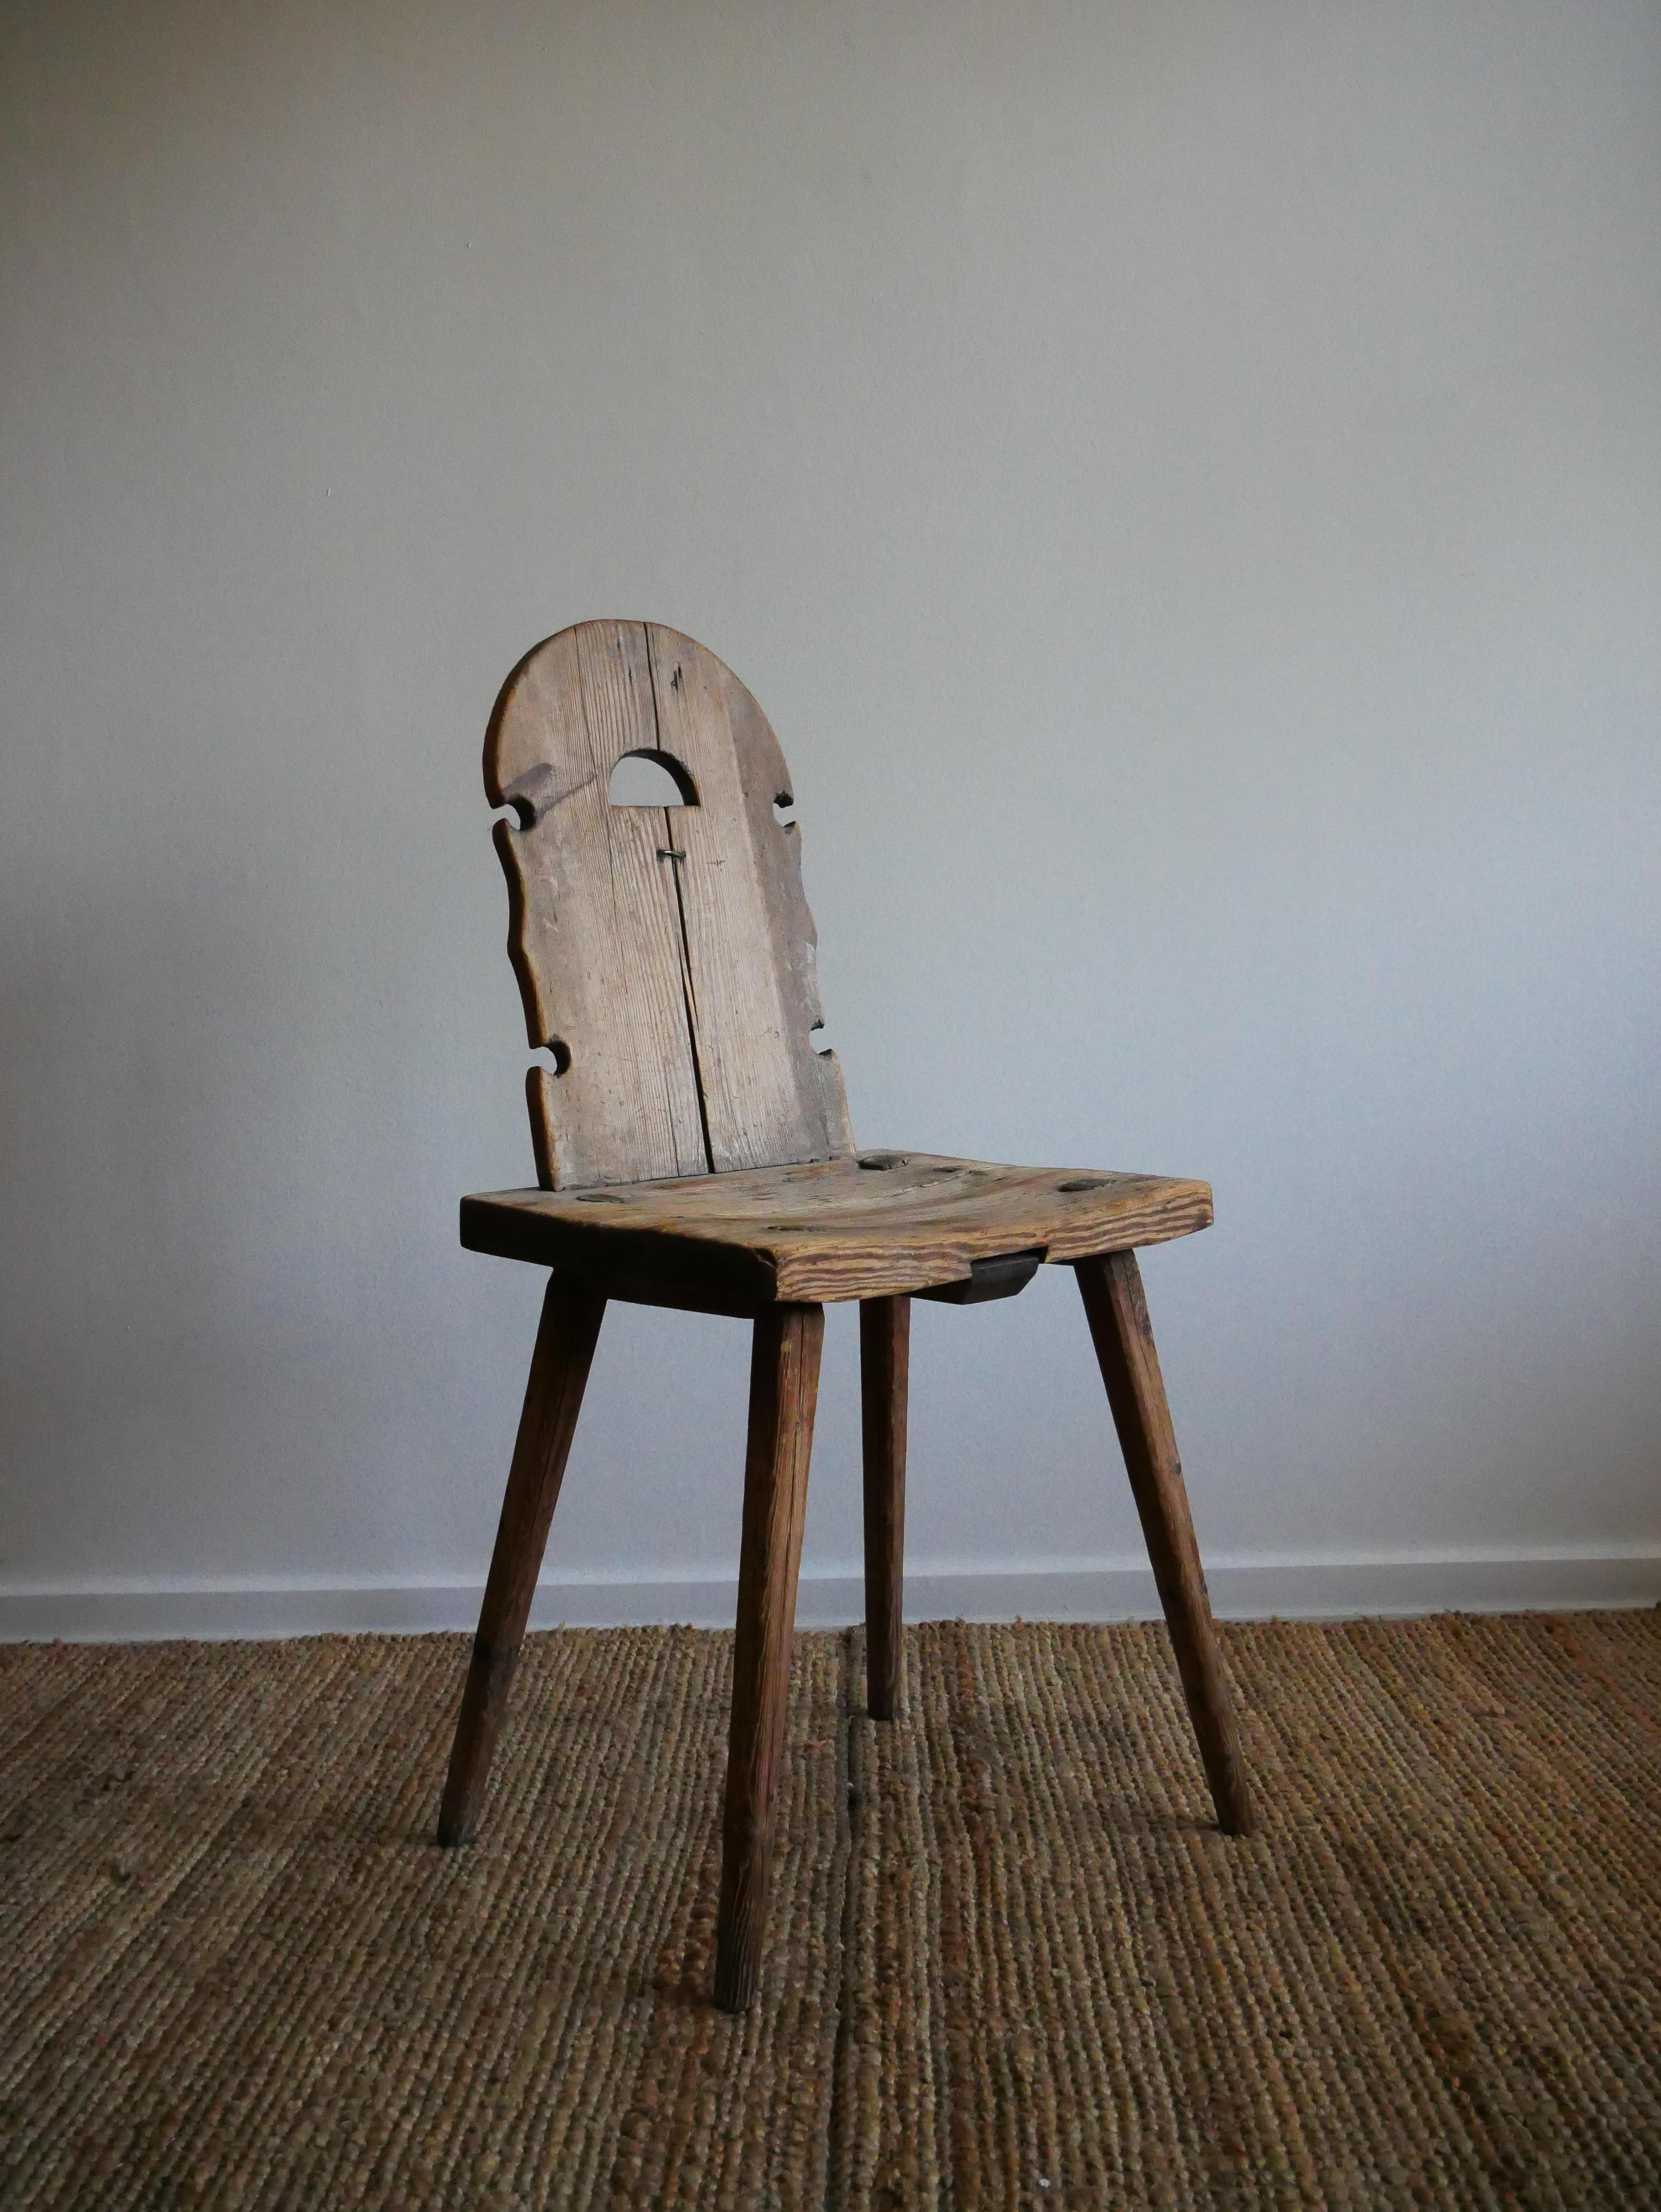 Hand-Crafted Swedish Folk Art Chair, circa 1780-1830s